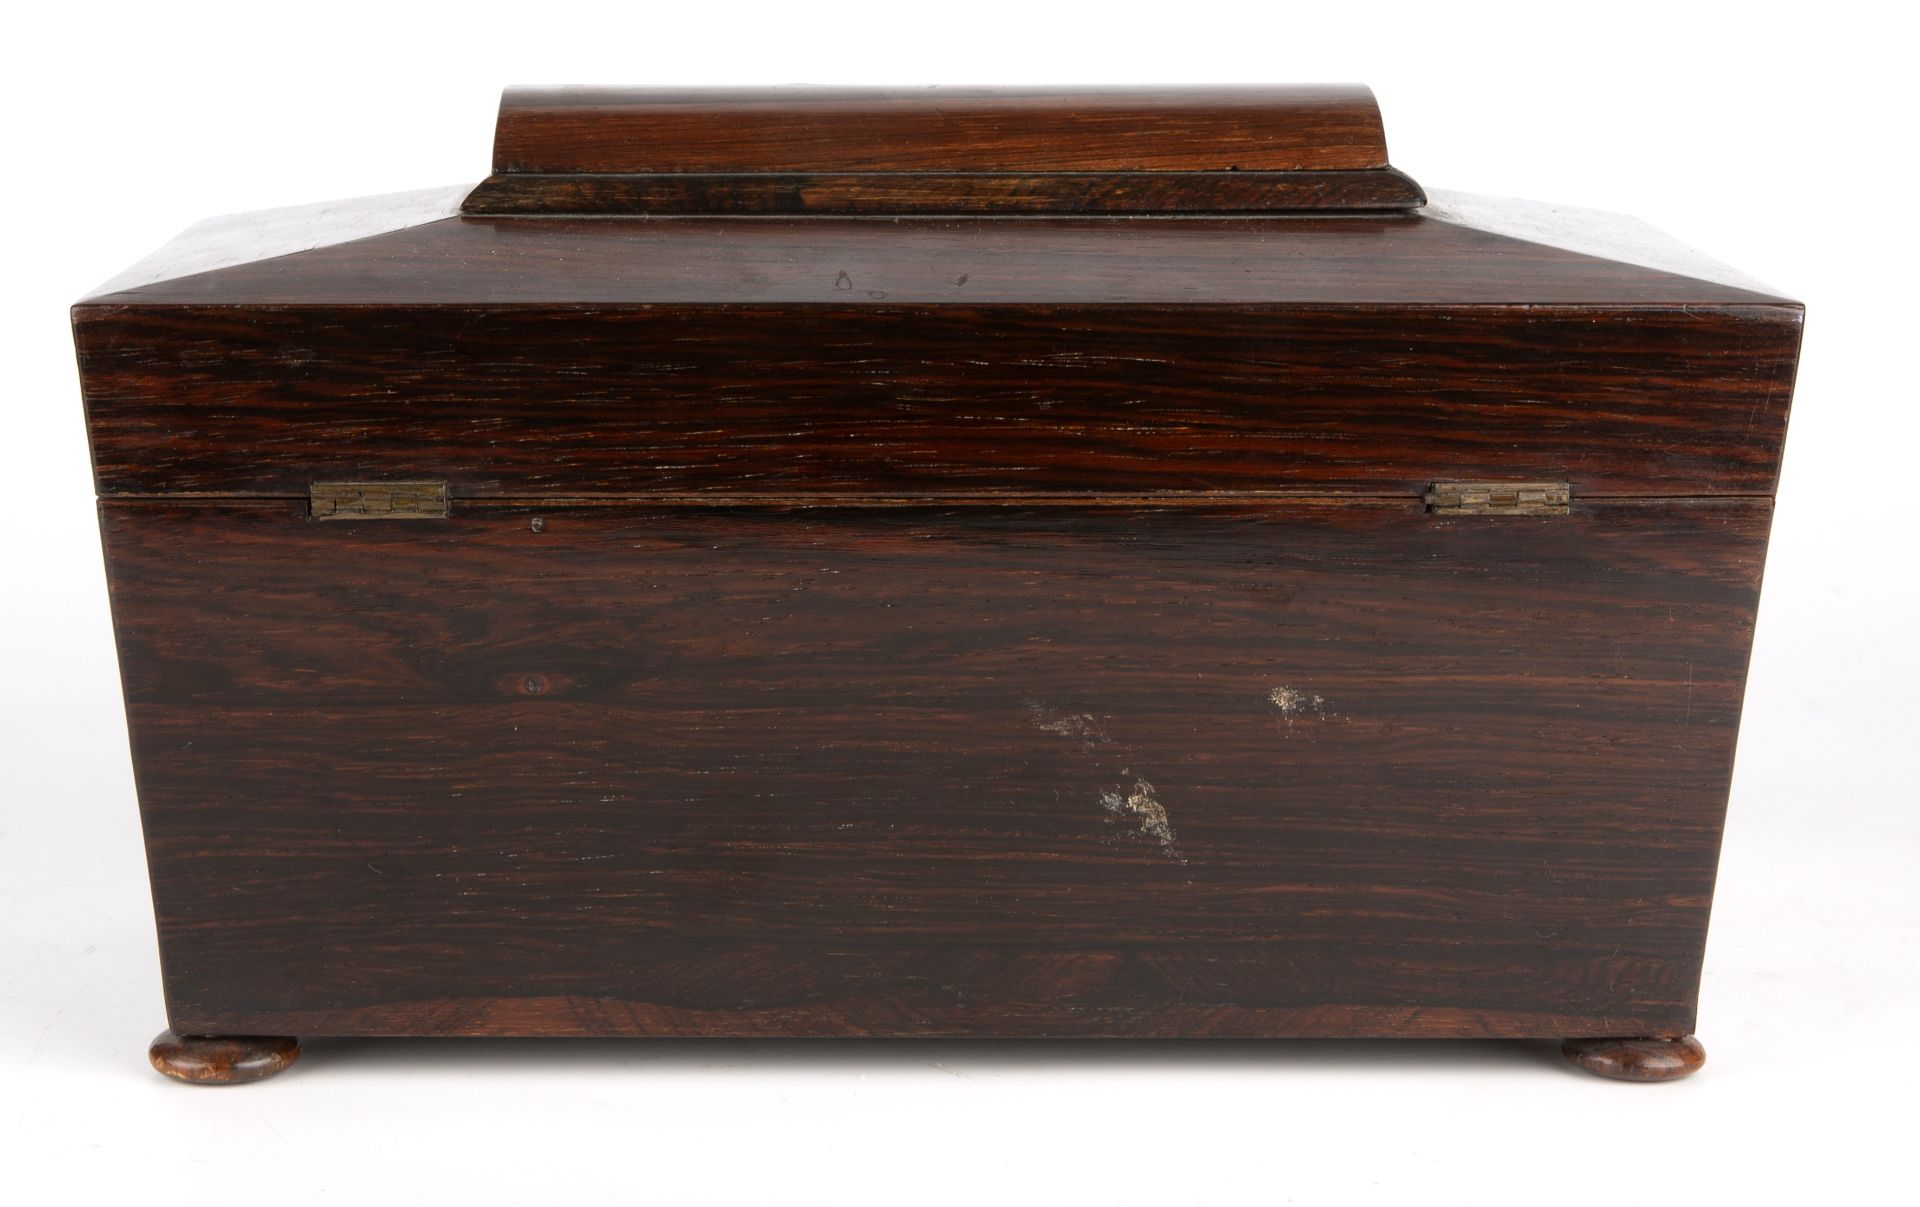 A Regency rosewood tea caddy of sarcophagus form with turned bun feet, 30cm wide 16cm deep 18cm high - Image 4 of 4